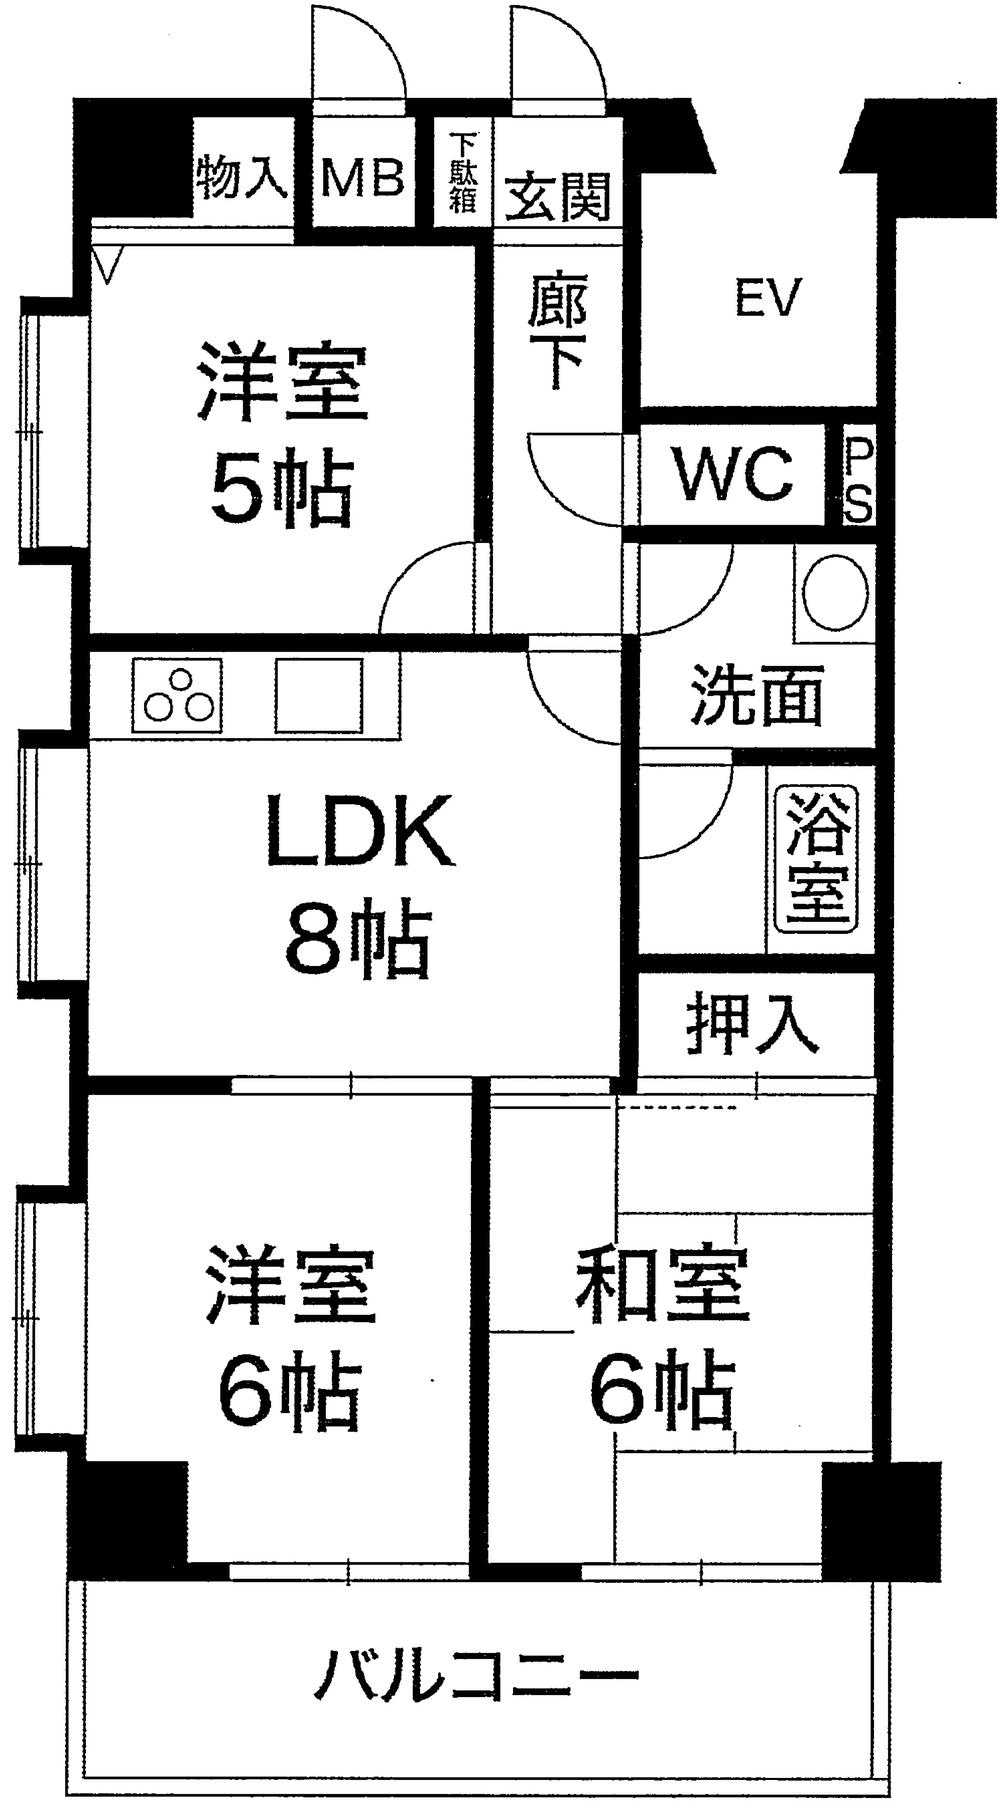 Floor plan. 3LDK, Price 7.8 million yen, Occupied area 55.35 sq m , Balcony area 8.25 sq m